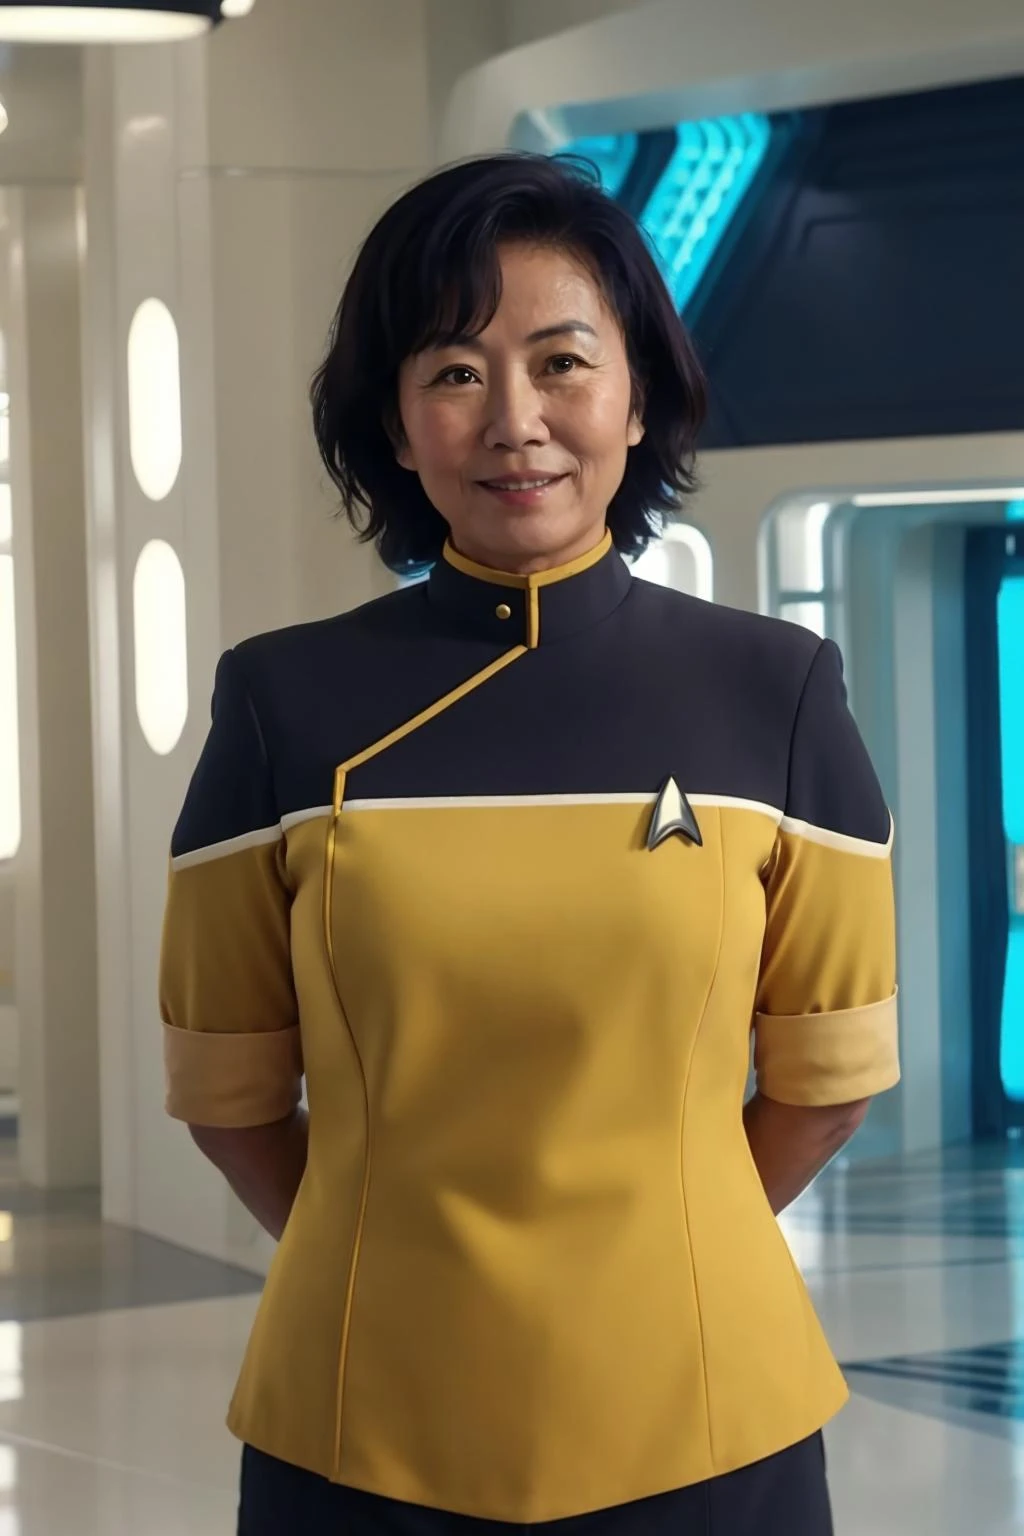 older asian  woman in a yellow sttldunf uniform,entps room